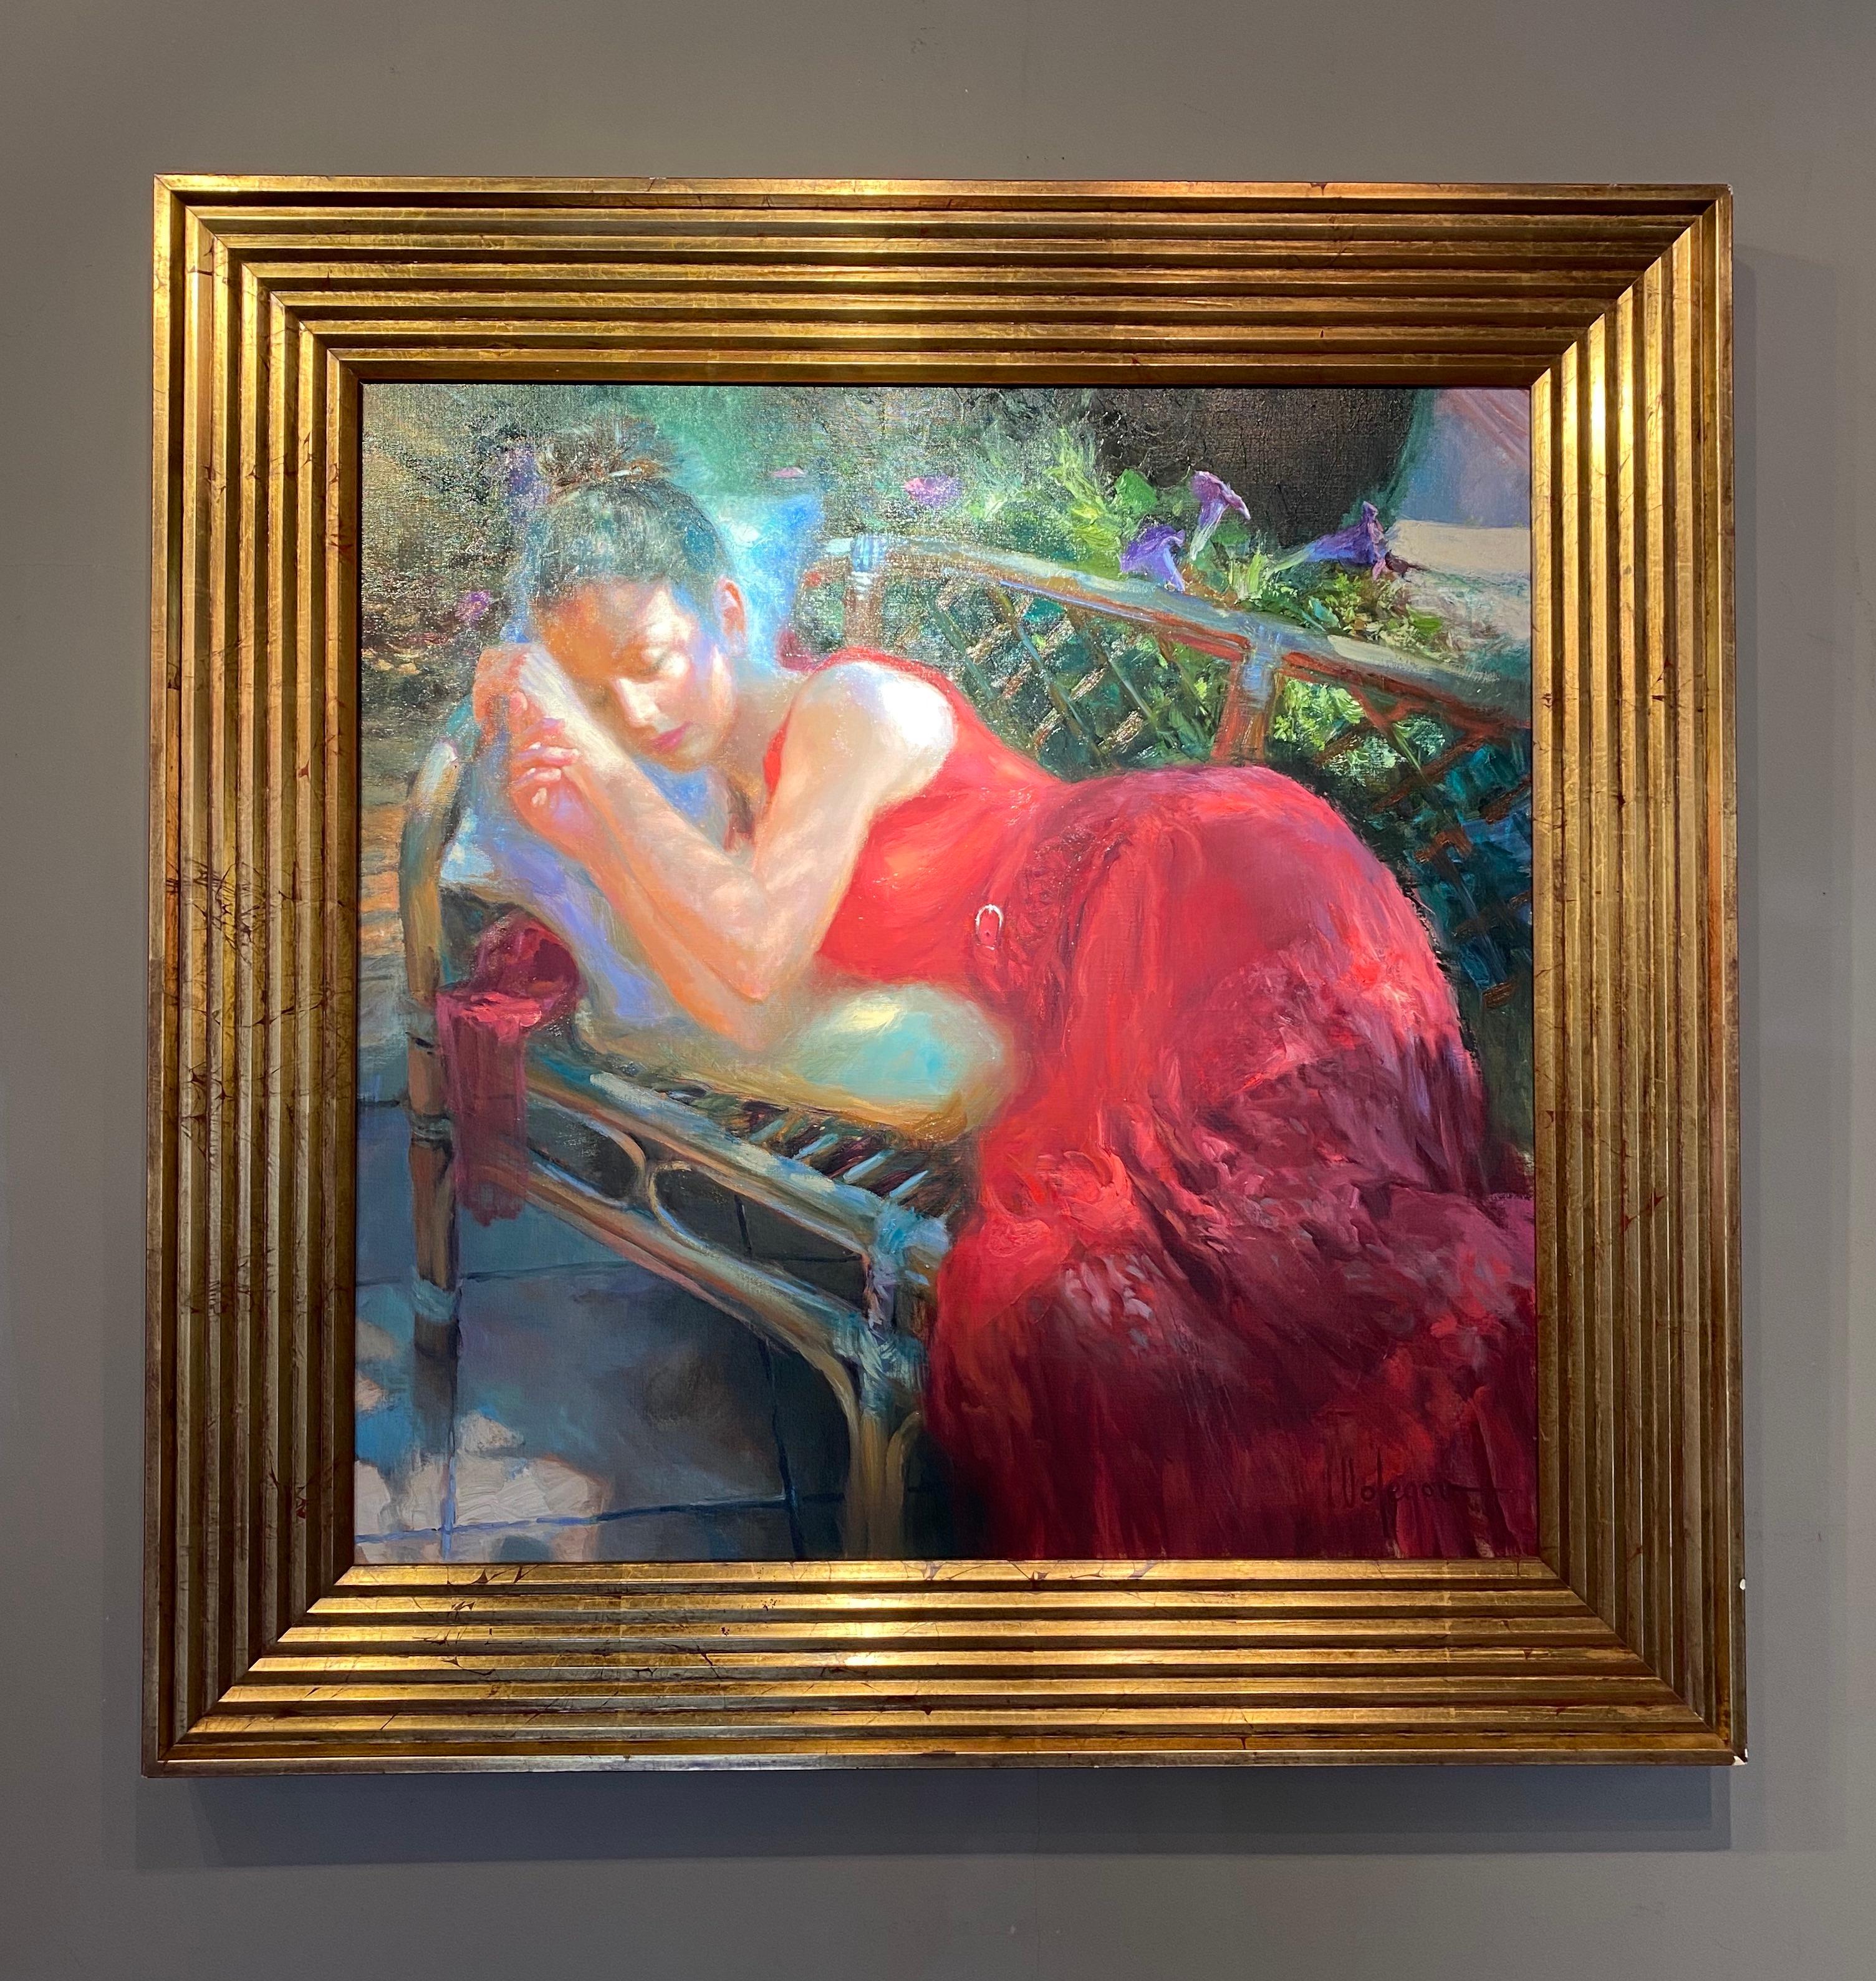 Portrait Painting Vladimir Volegov - Peinture figurative contemporaine rouge d'une femme endormie "Siesta en Roja". 